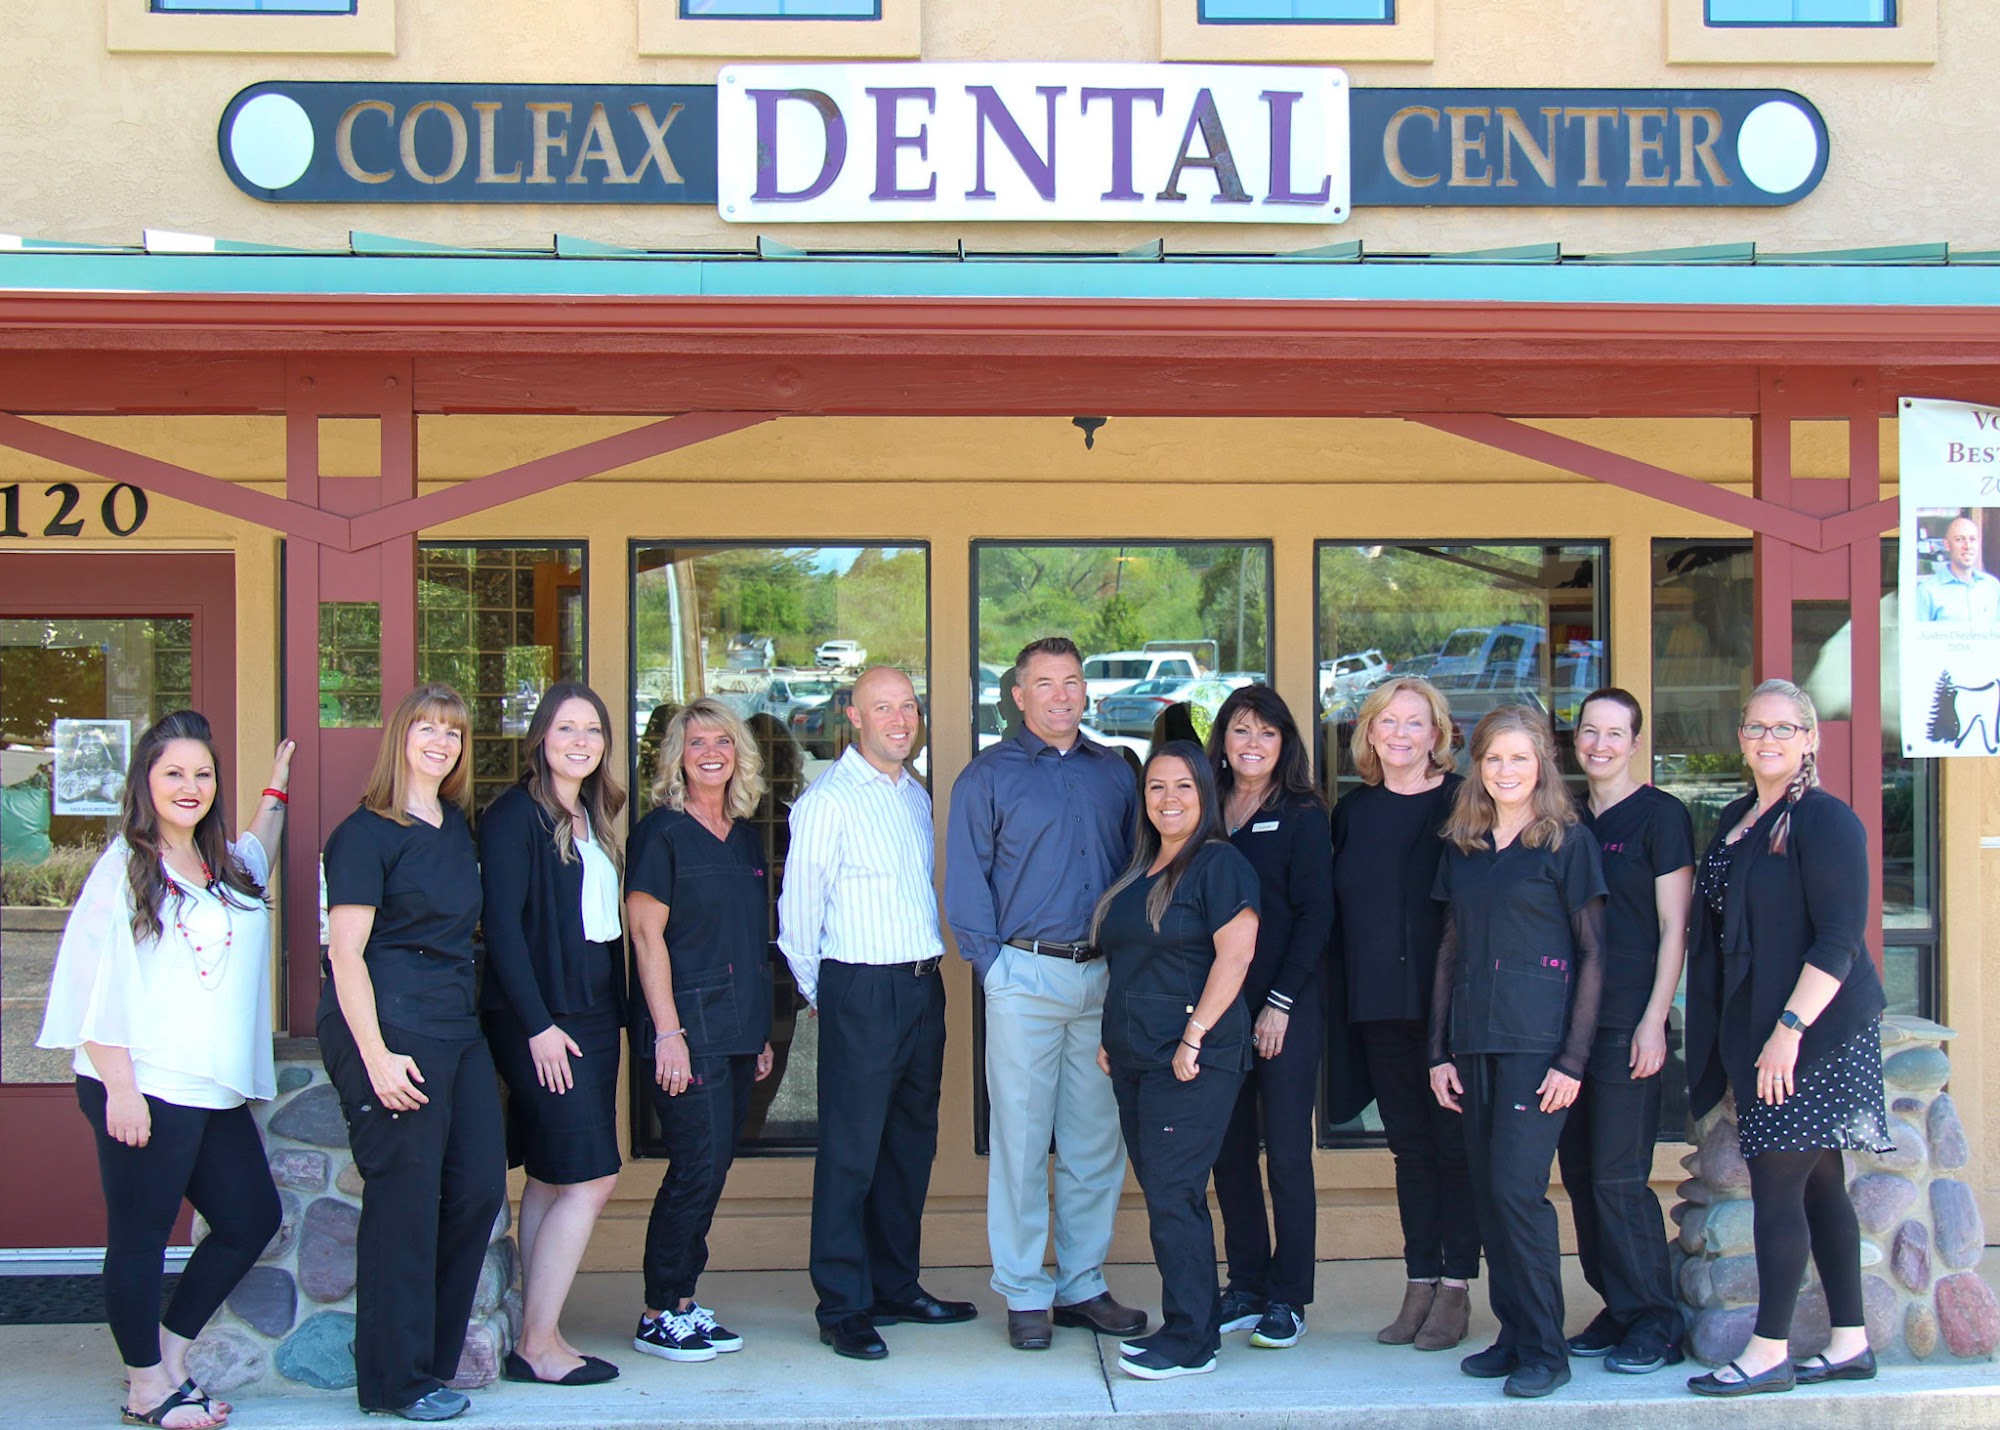 Colfax Dental Center 120 Whitcomb Ave, Colfax California 95713